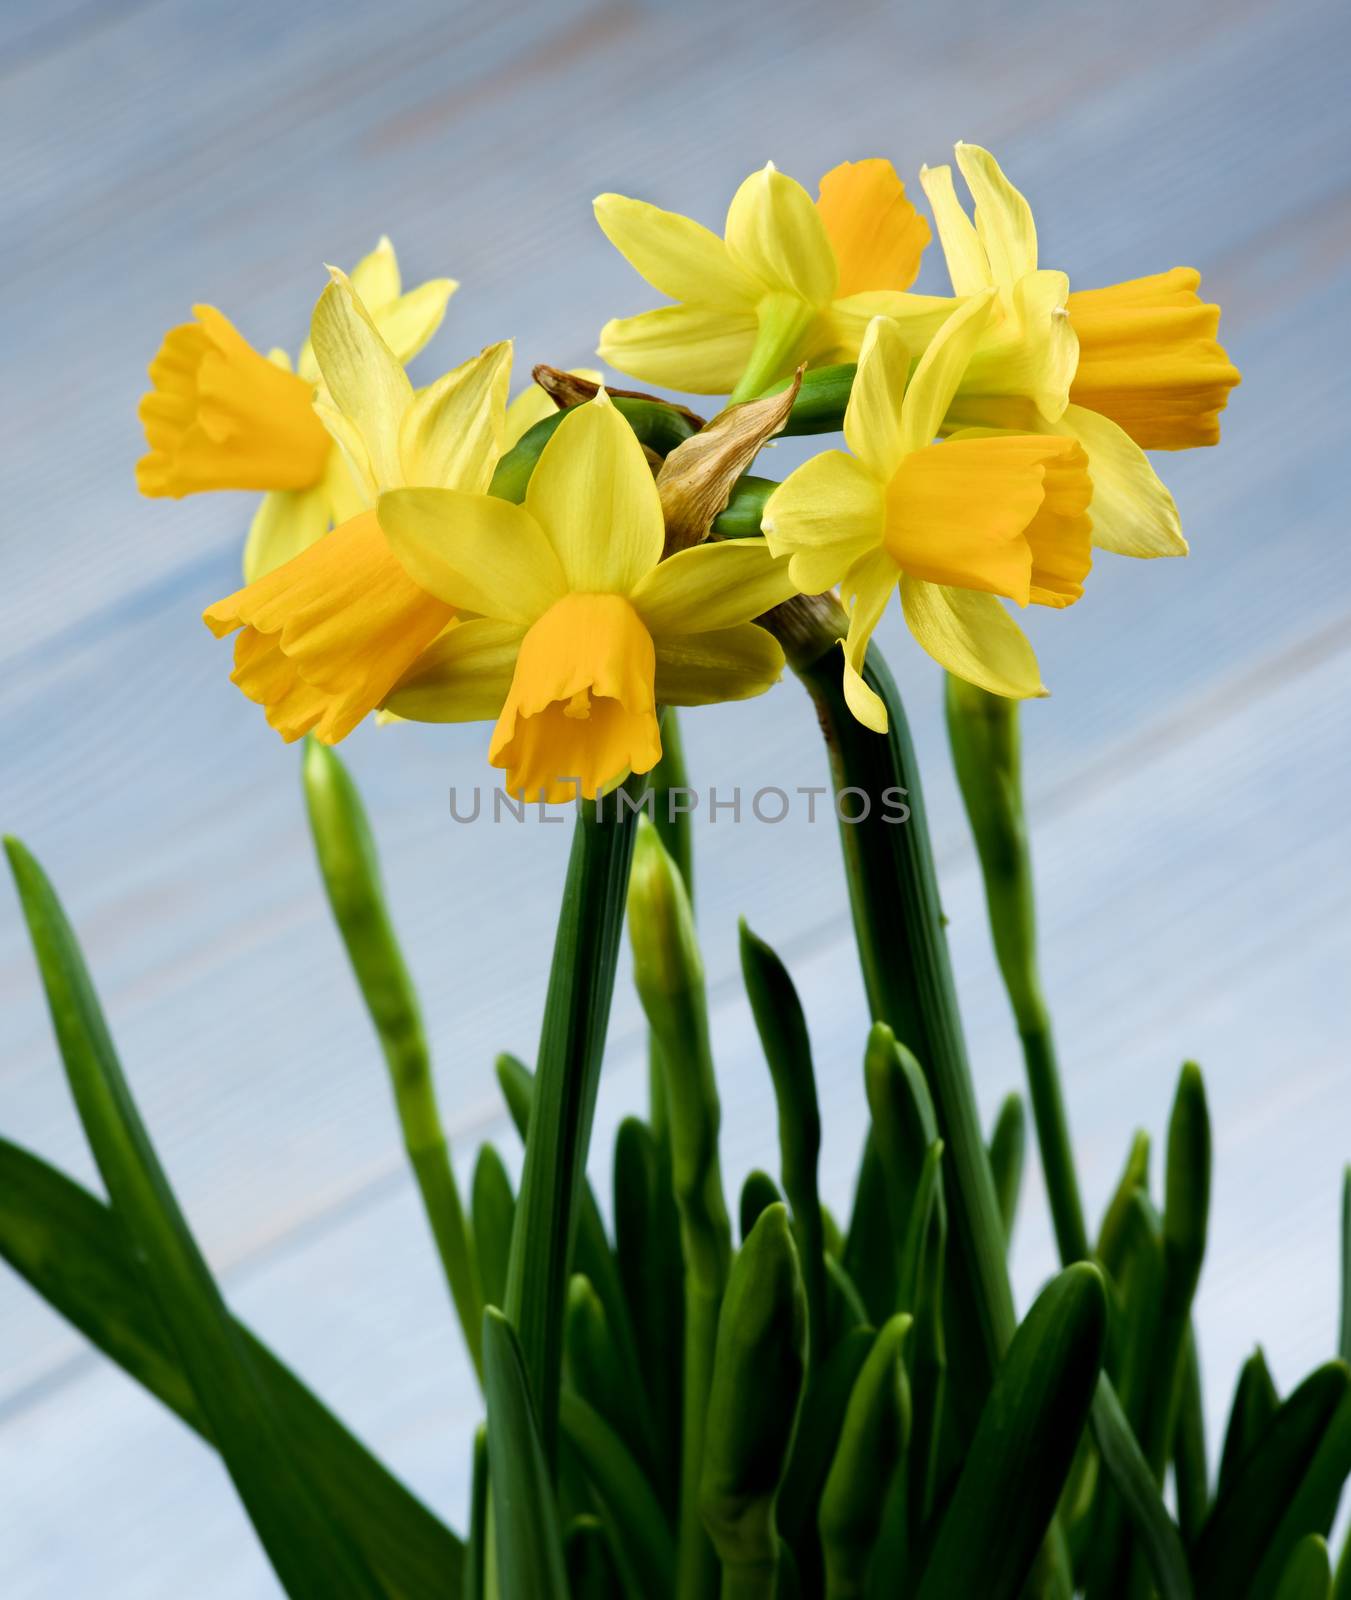 Wild Yellow Daffodils by zhekos